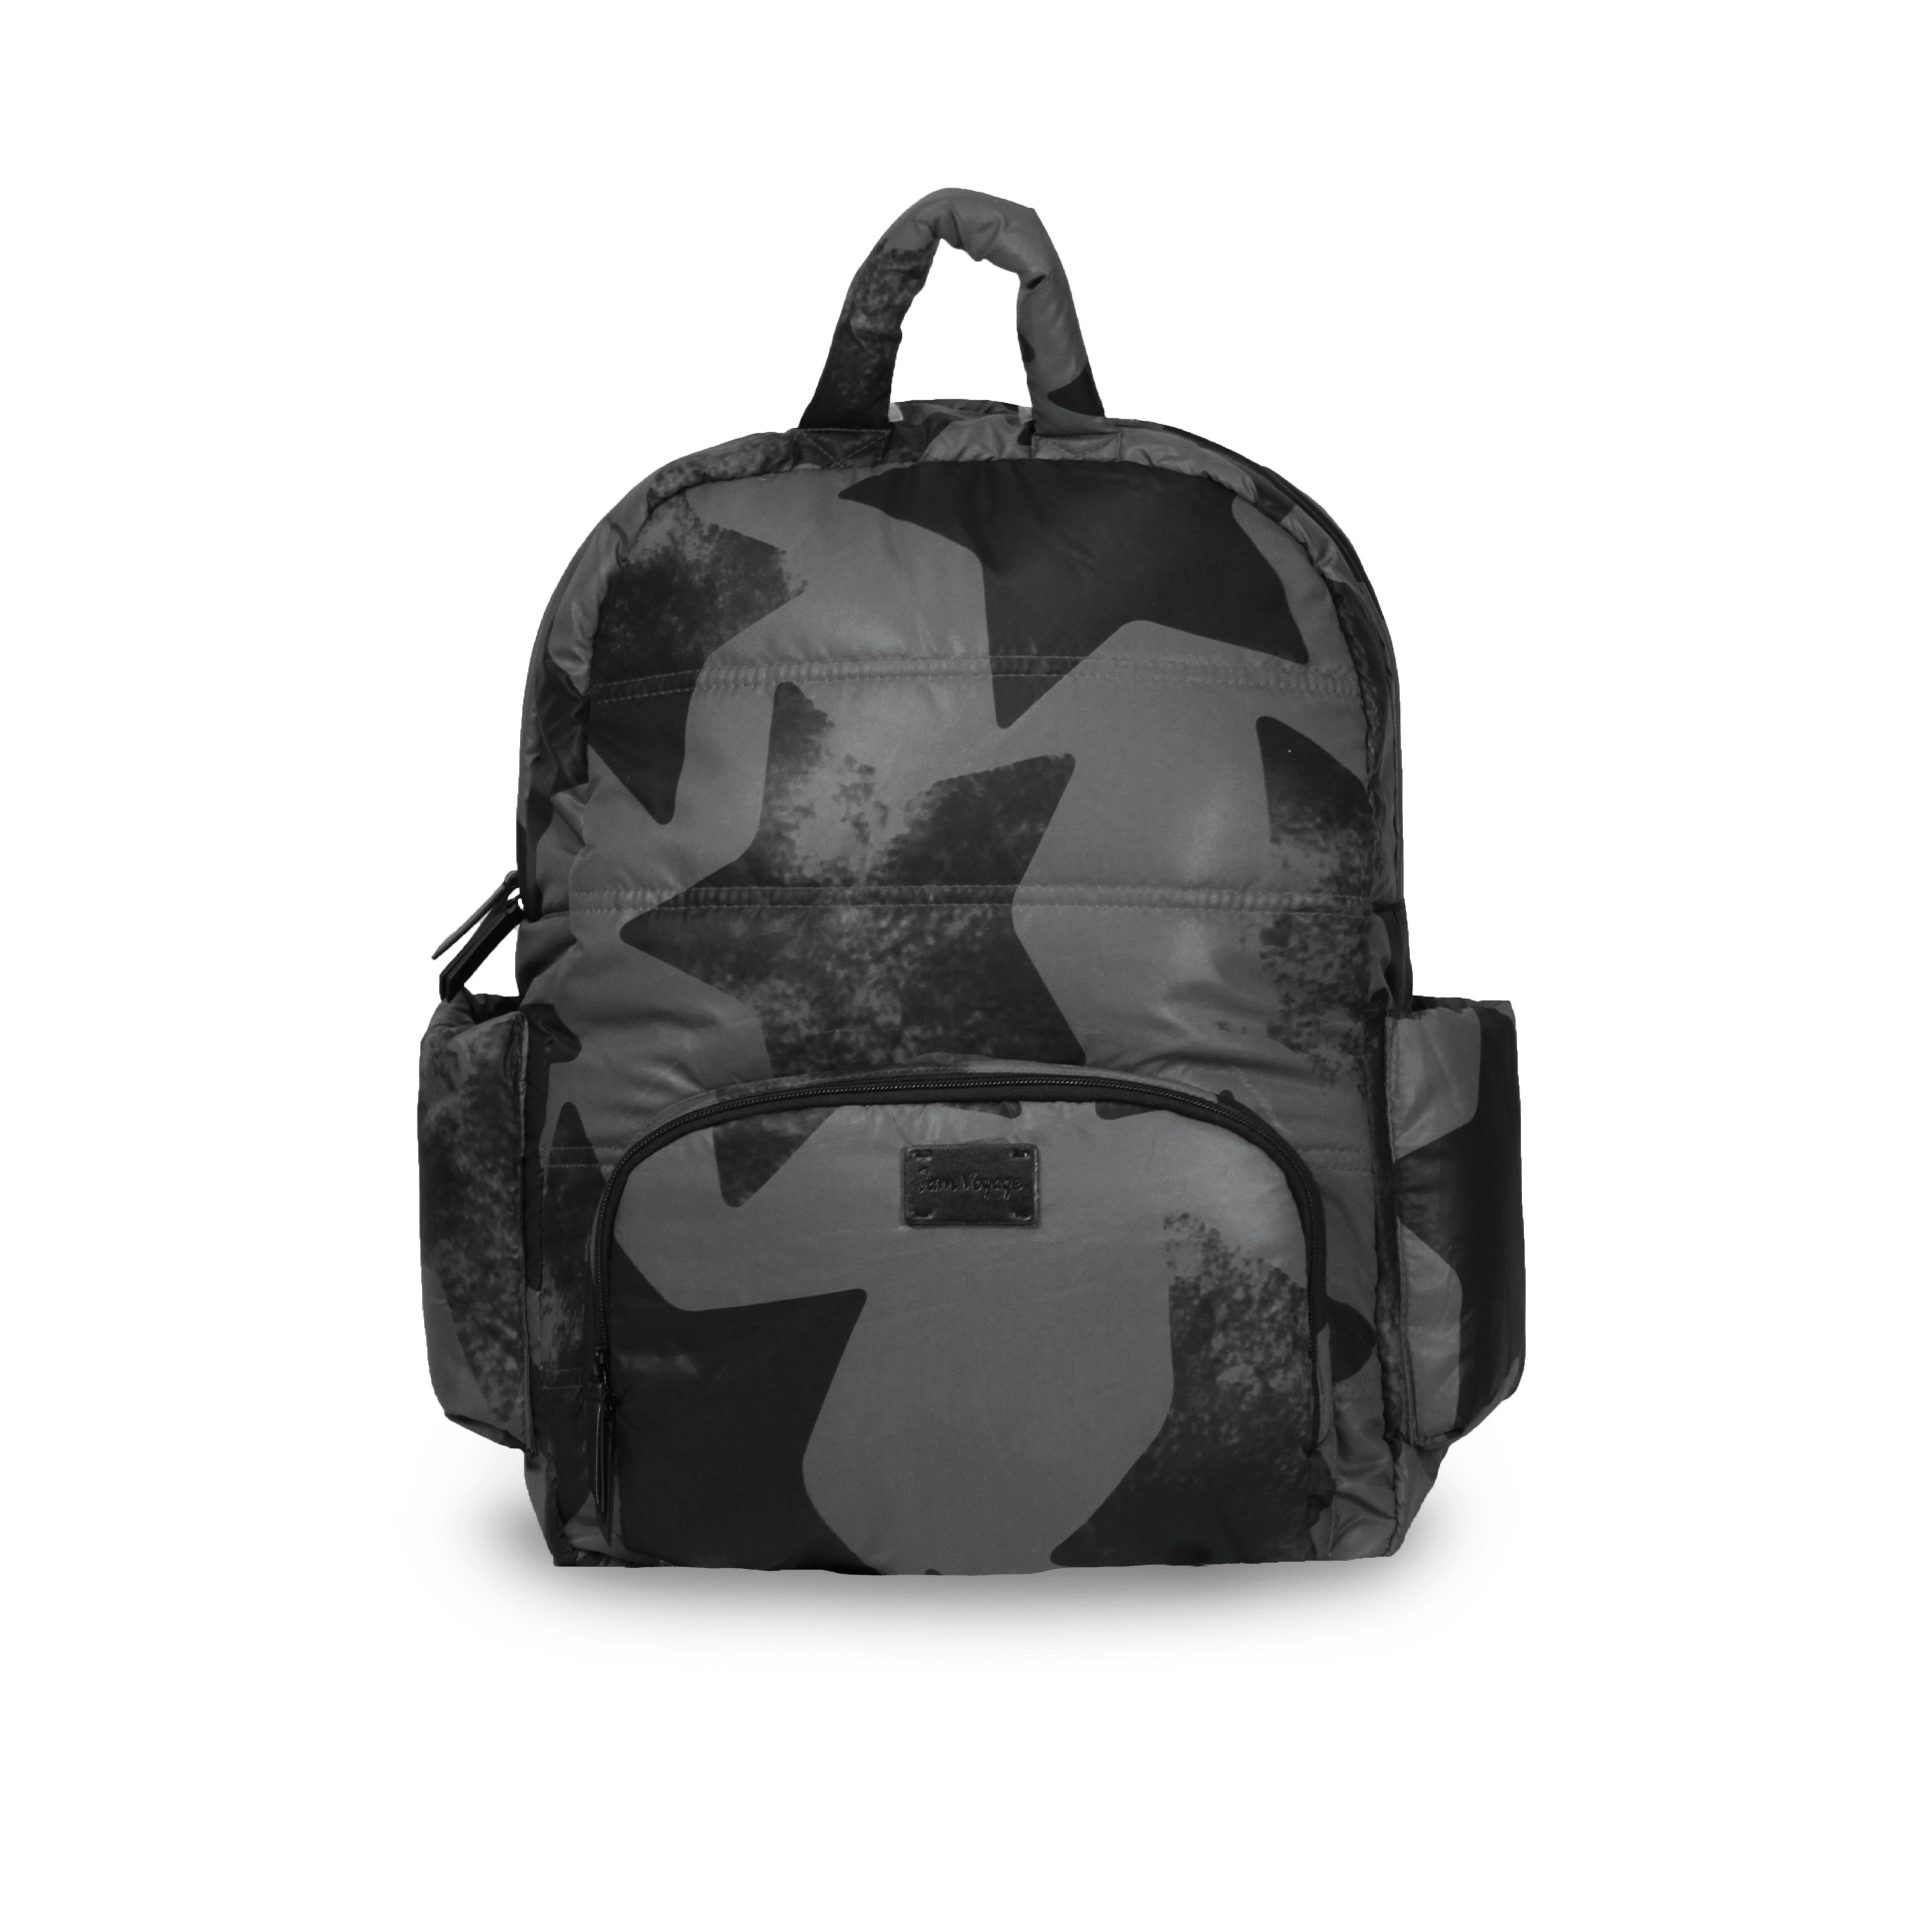 7 AM Voyage Diaper Bag Backpack - ANB Baby -$75 - $80